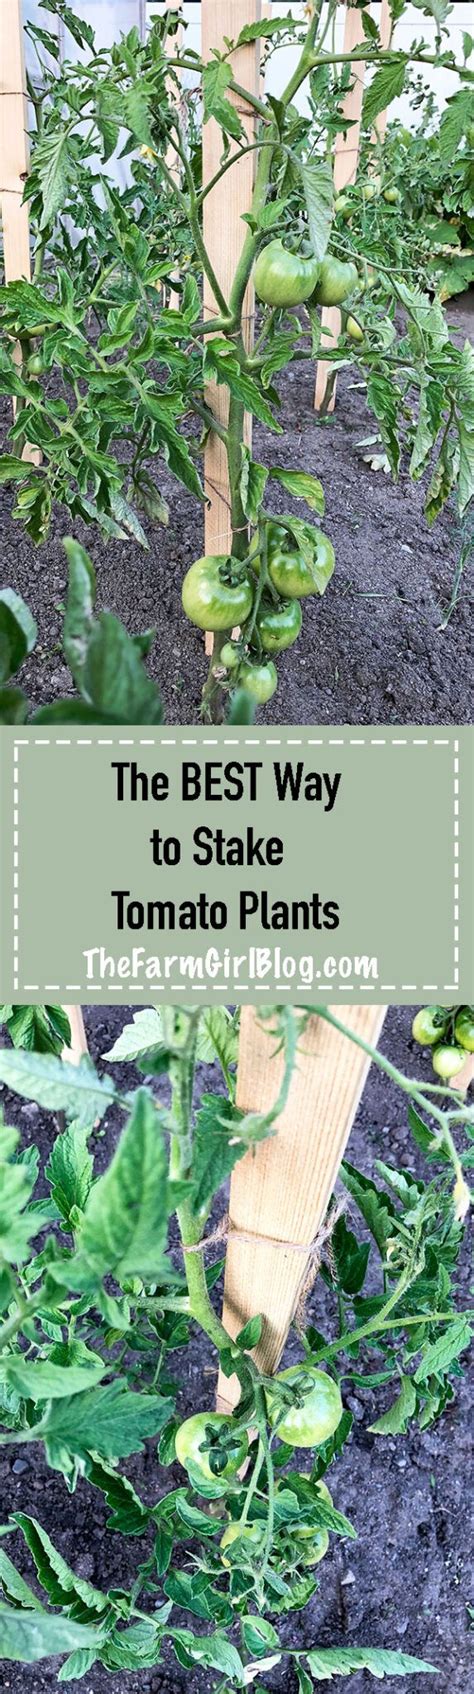 The Best Way To Stake Tomato Plants In 2020 Plants Zen Garden Diy